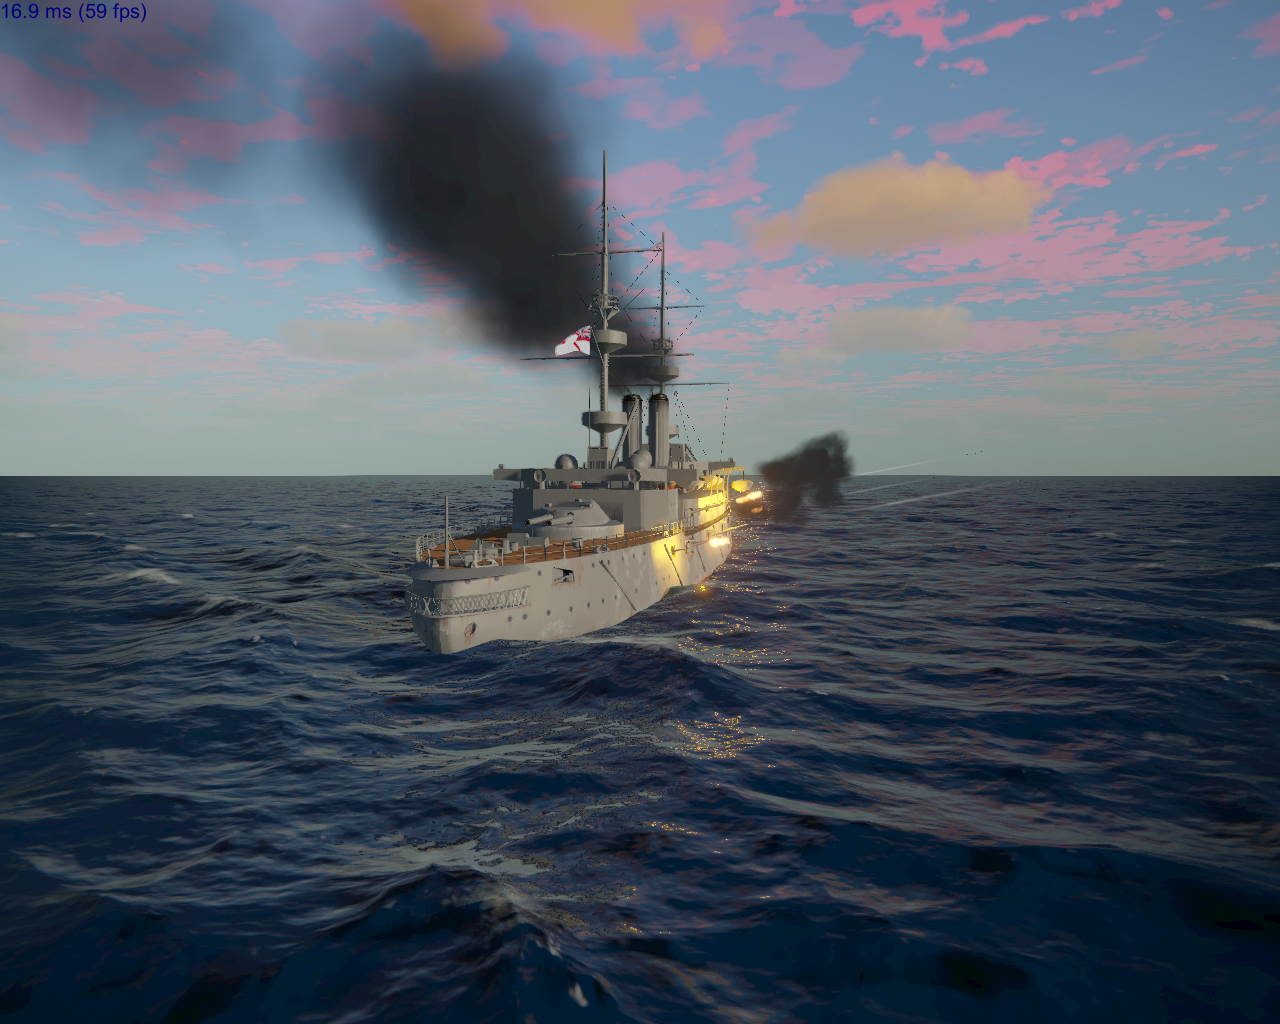 HMS Majestic firing